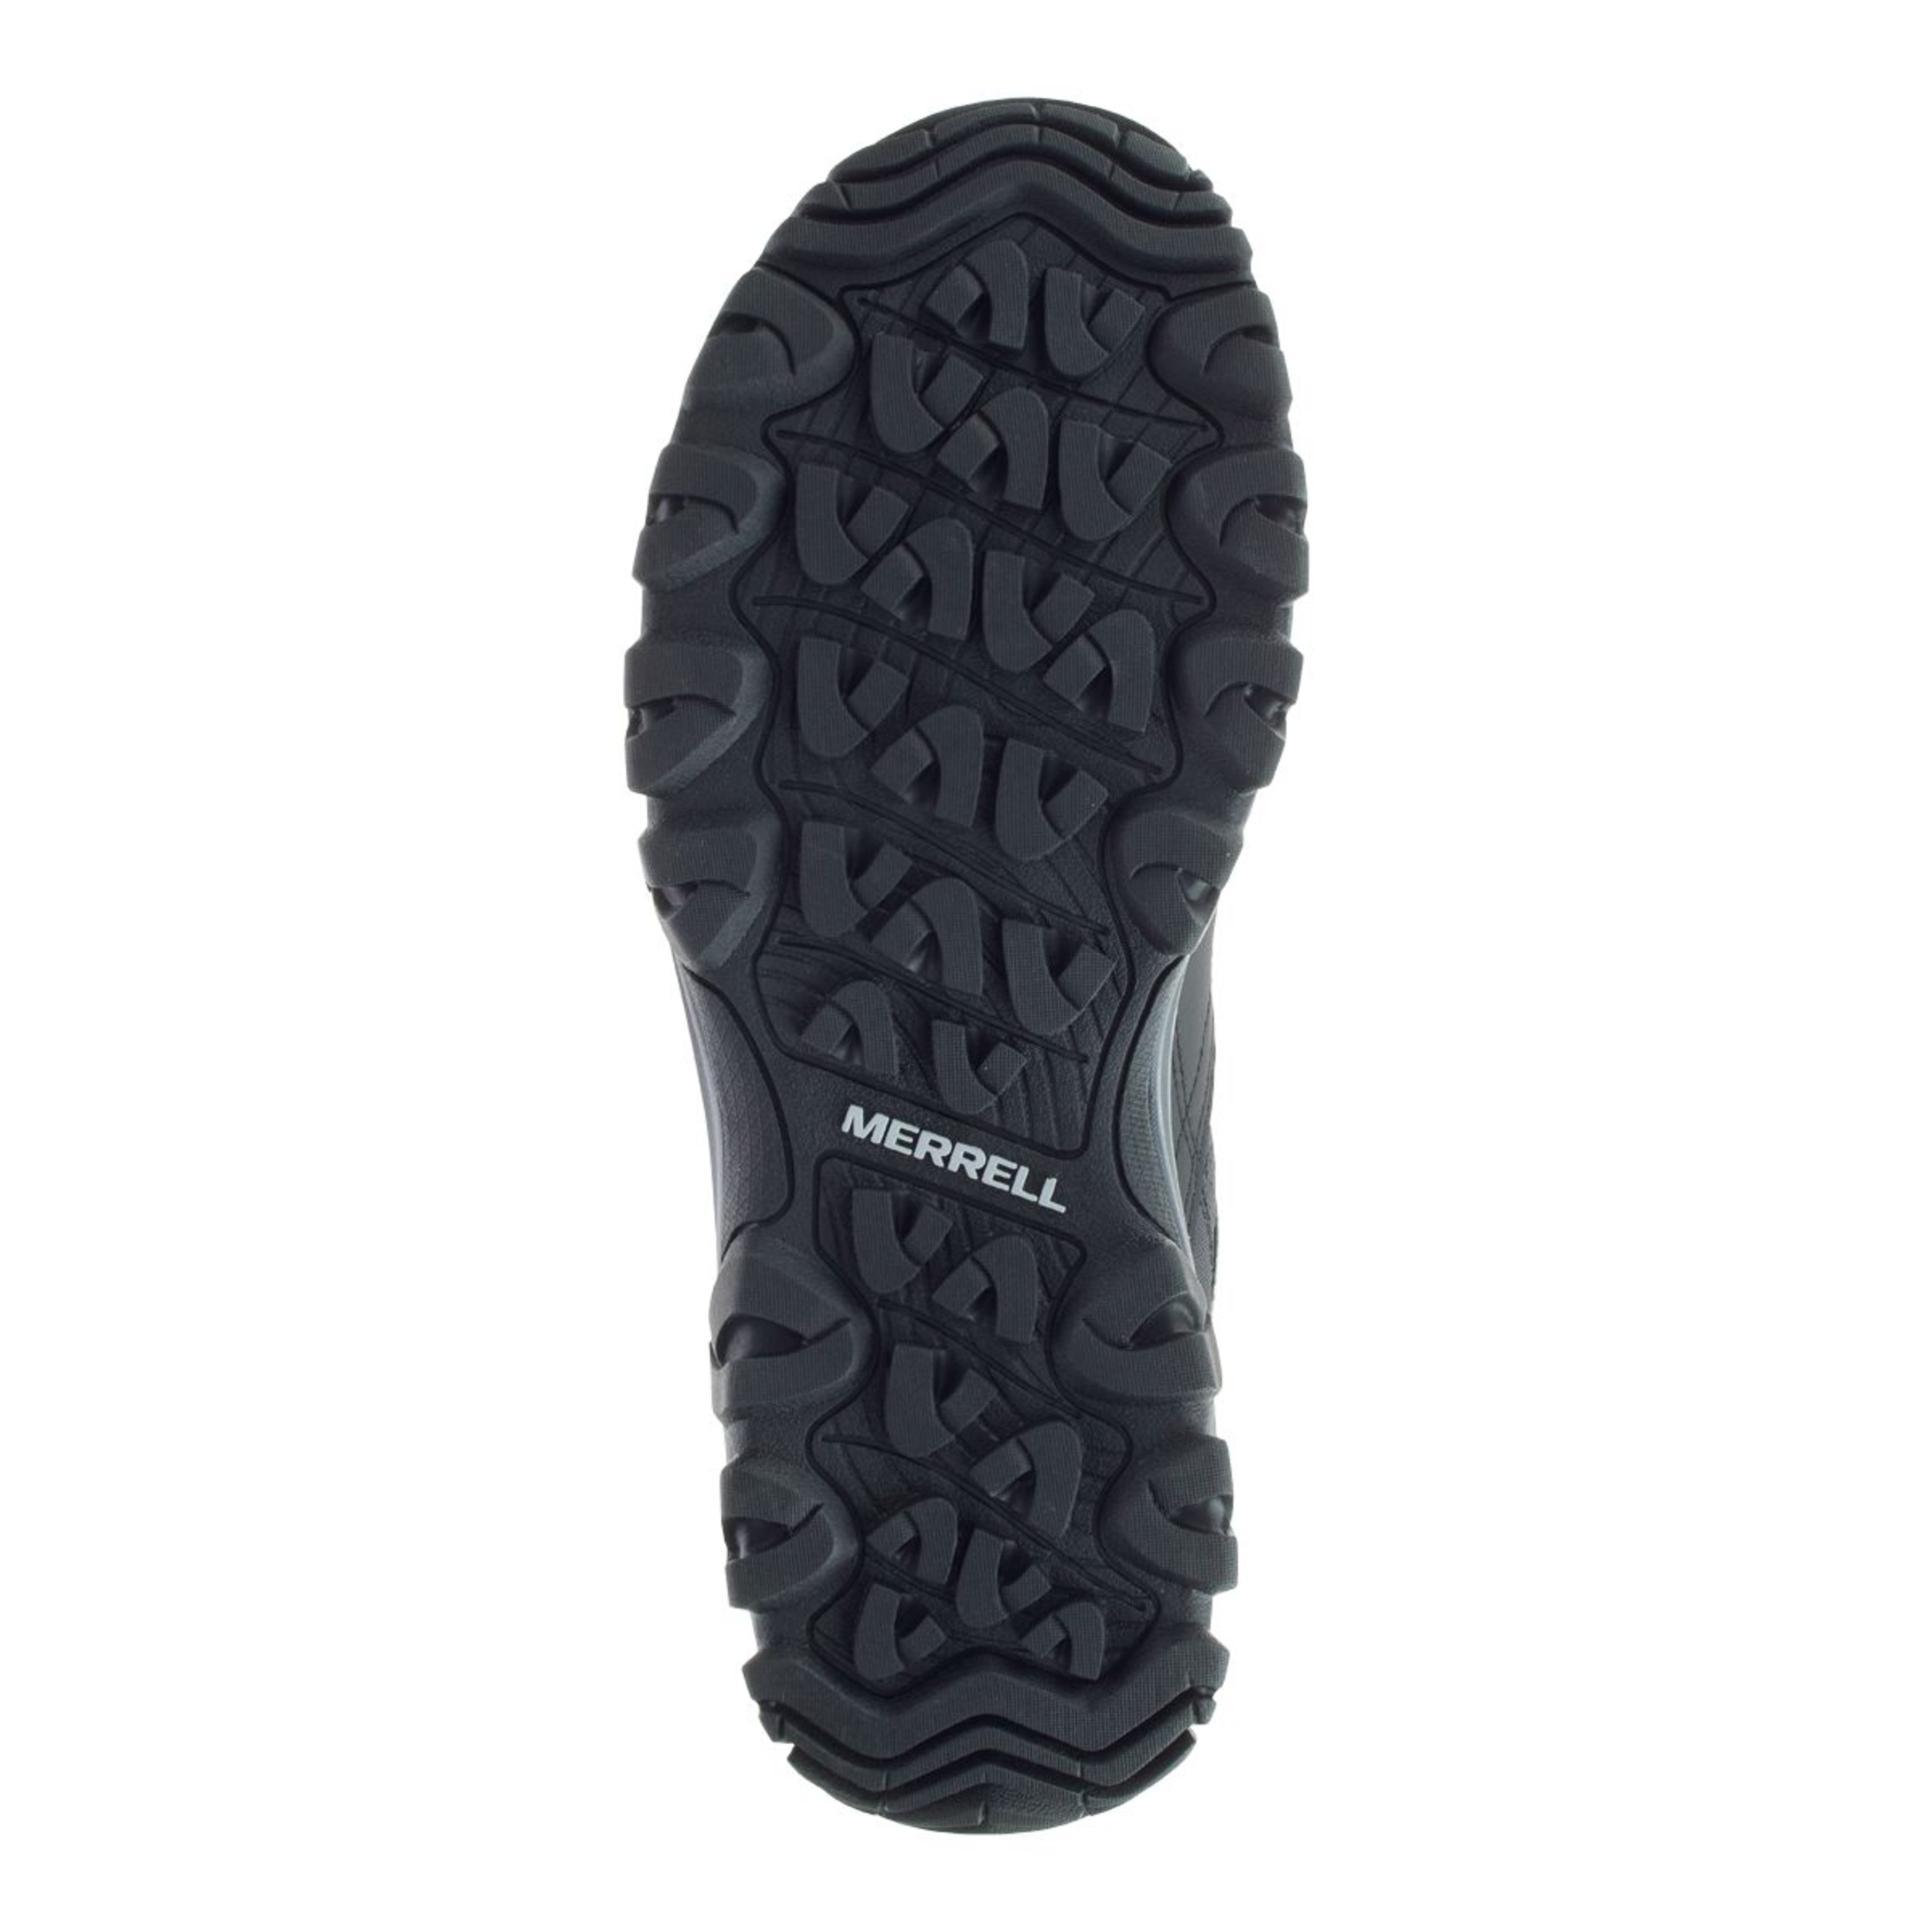 Merrell Men's Thermo Akita Winter Boots, Waterproof, Insulated | Sportchek